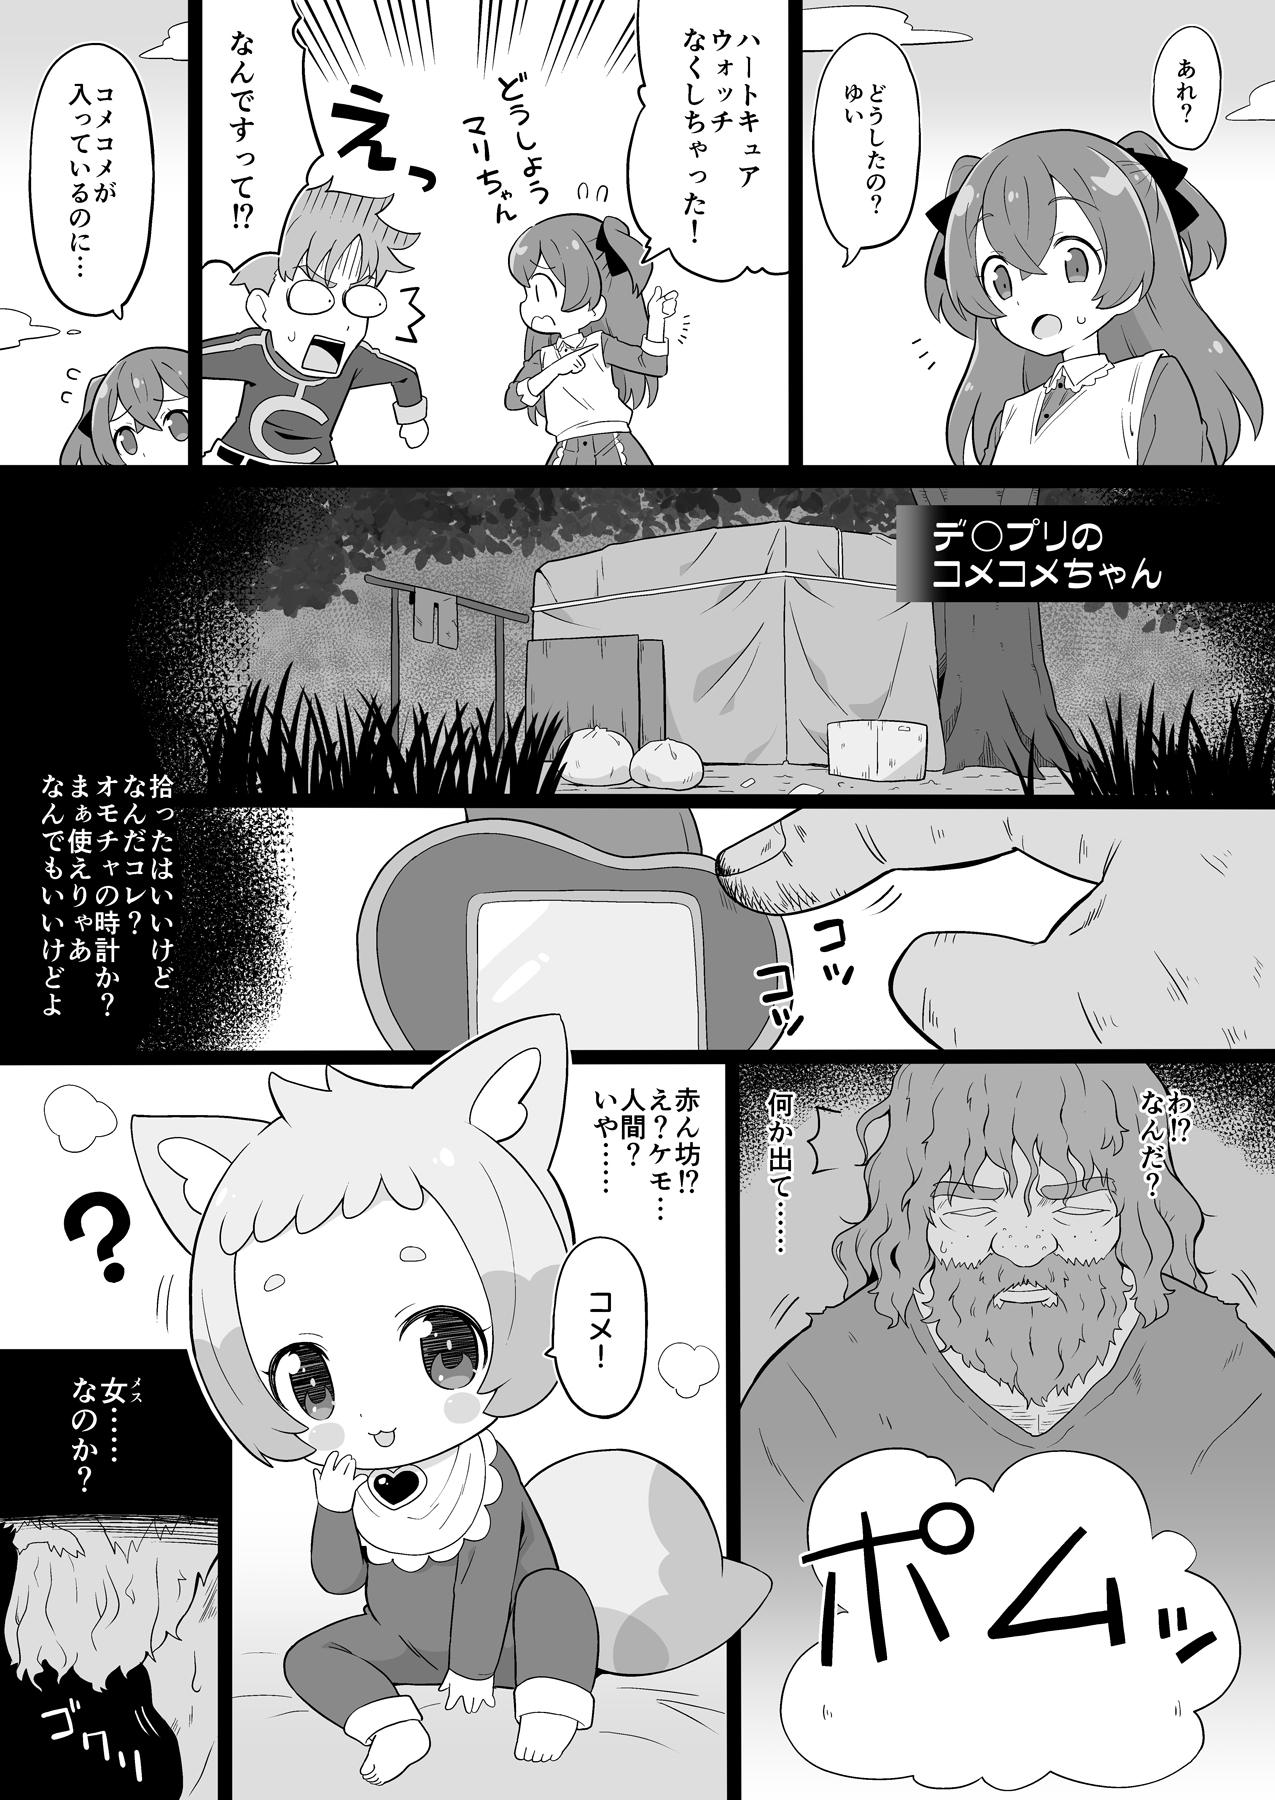 Vecina FAN Box Manga Matome Hon - The idolmaster Tate no yuusha no nariagari | the rising of the shield hero Stepbro - Page 10